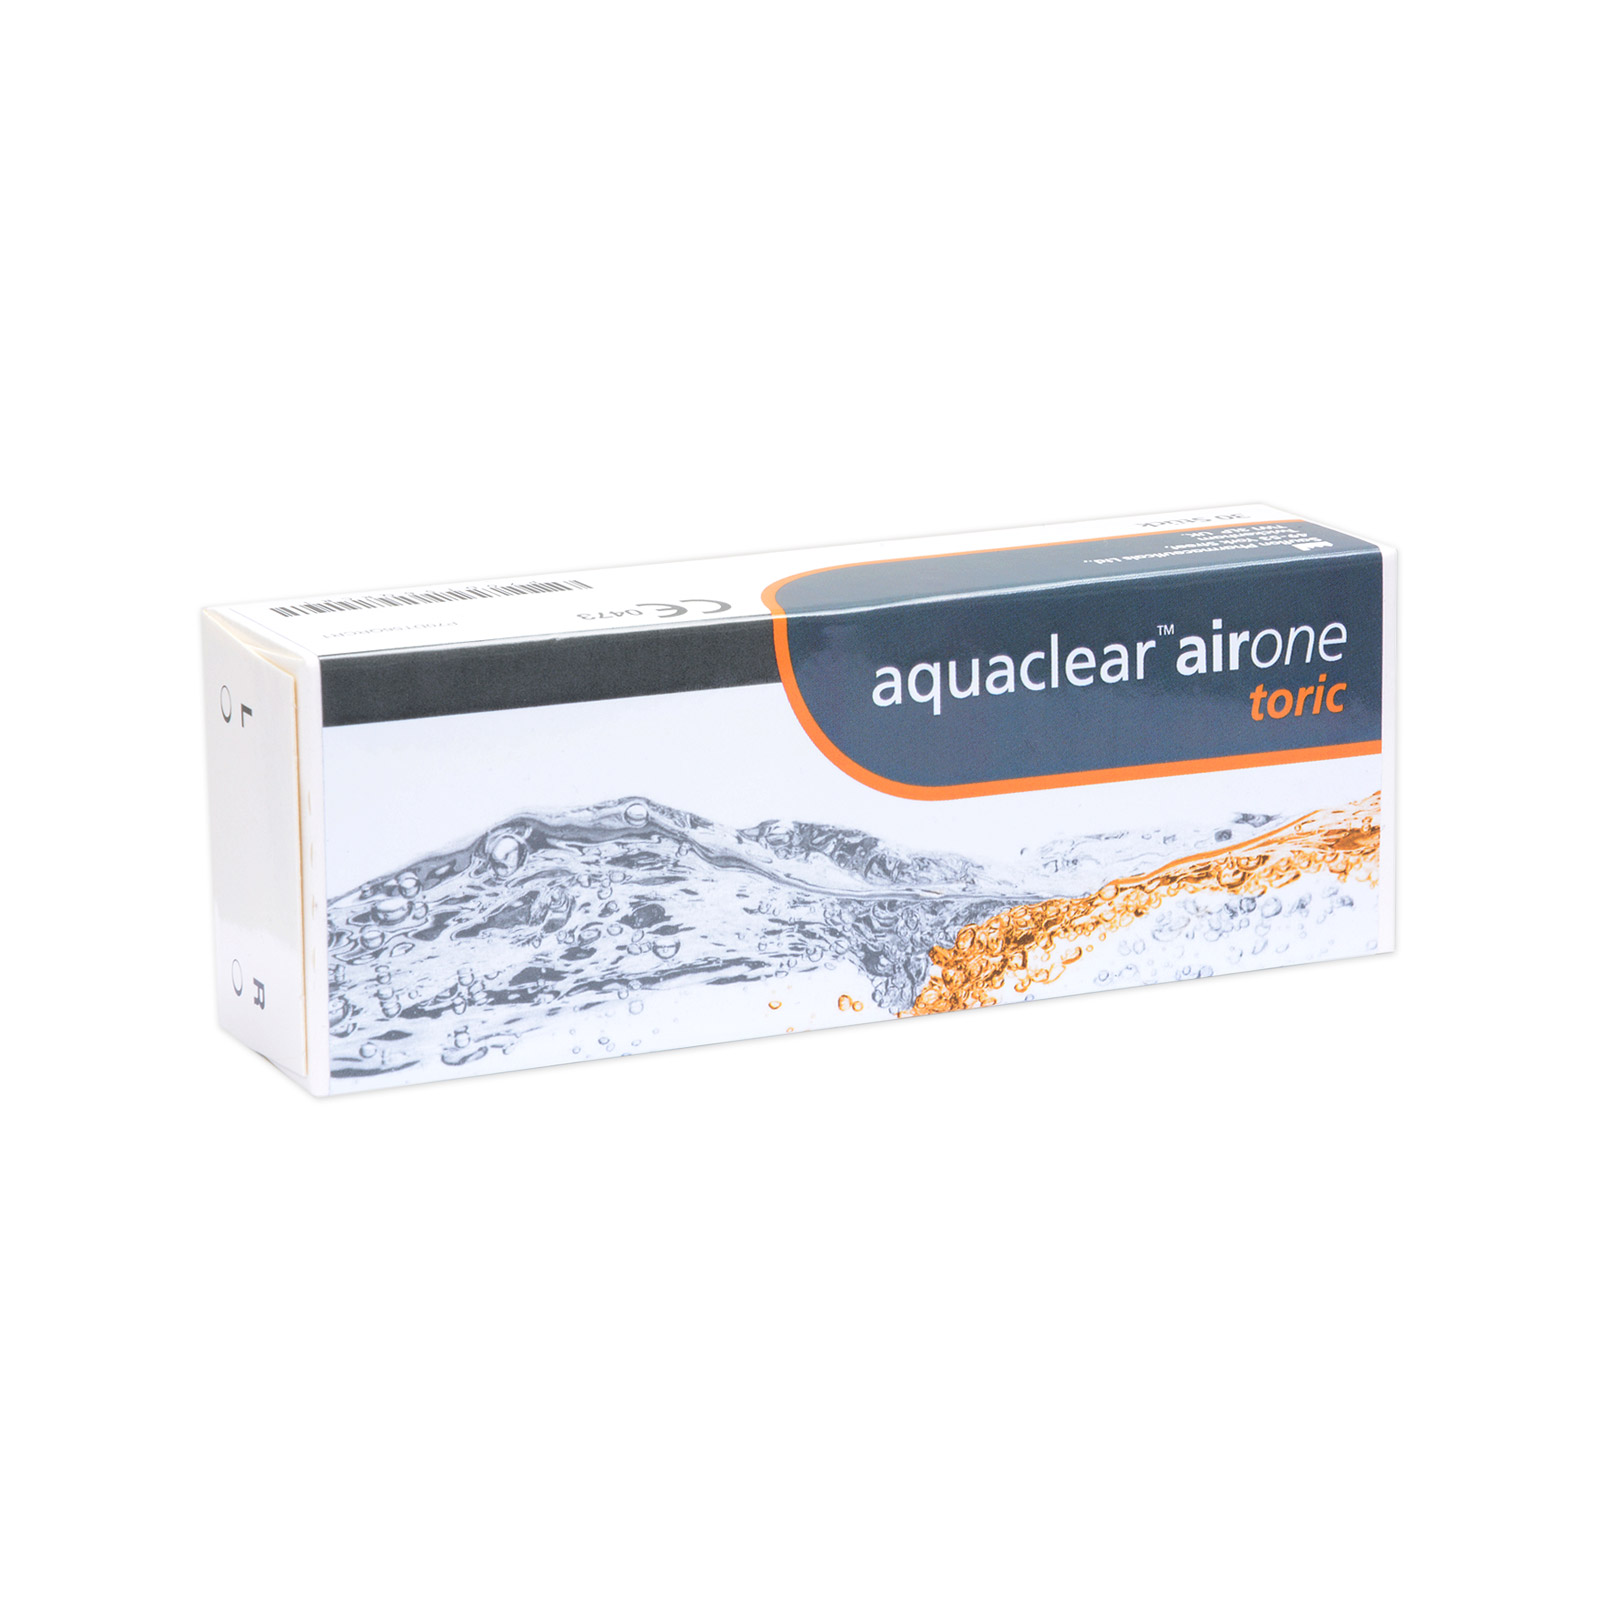 aquaclear-airone-toric-aquaclear-coopervision-kontaktlinsen